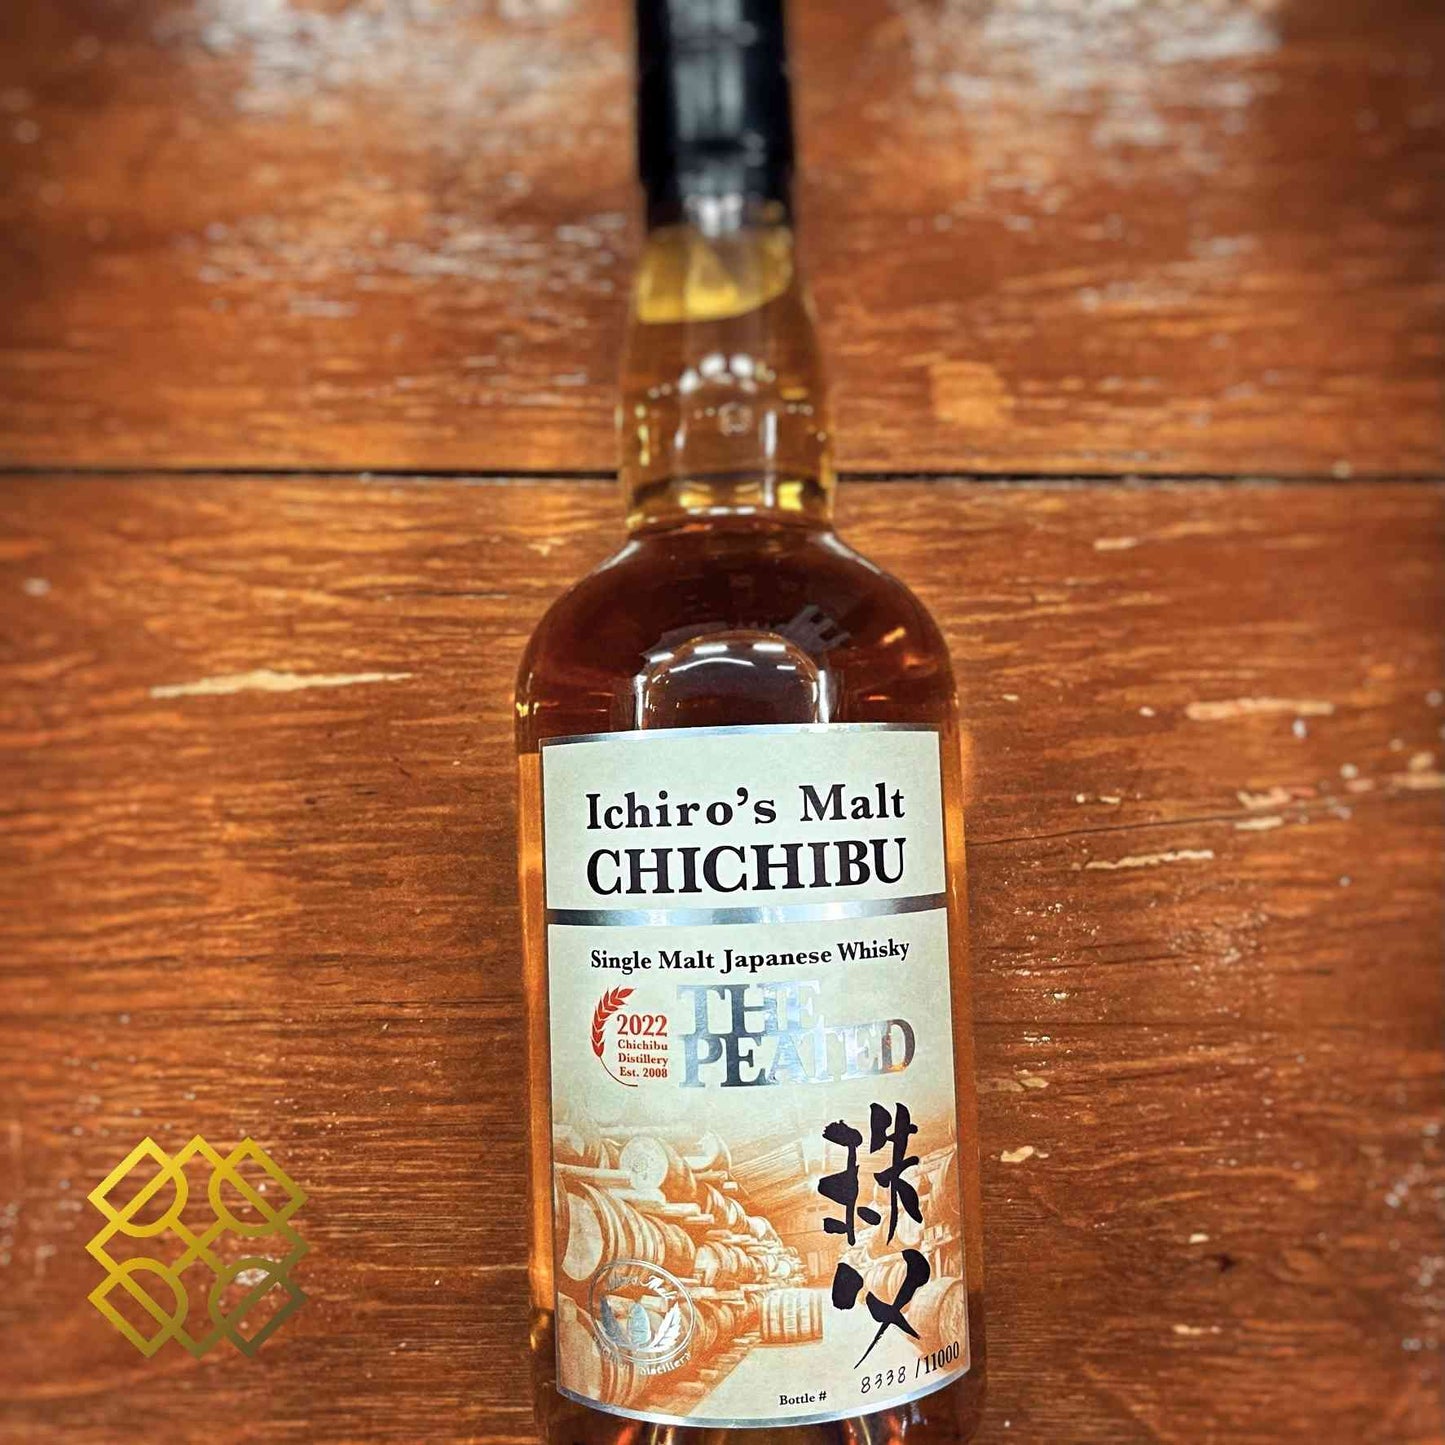 Chichibu - 2022, 53.5%  Type: Single Malt Whisky